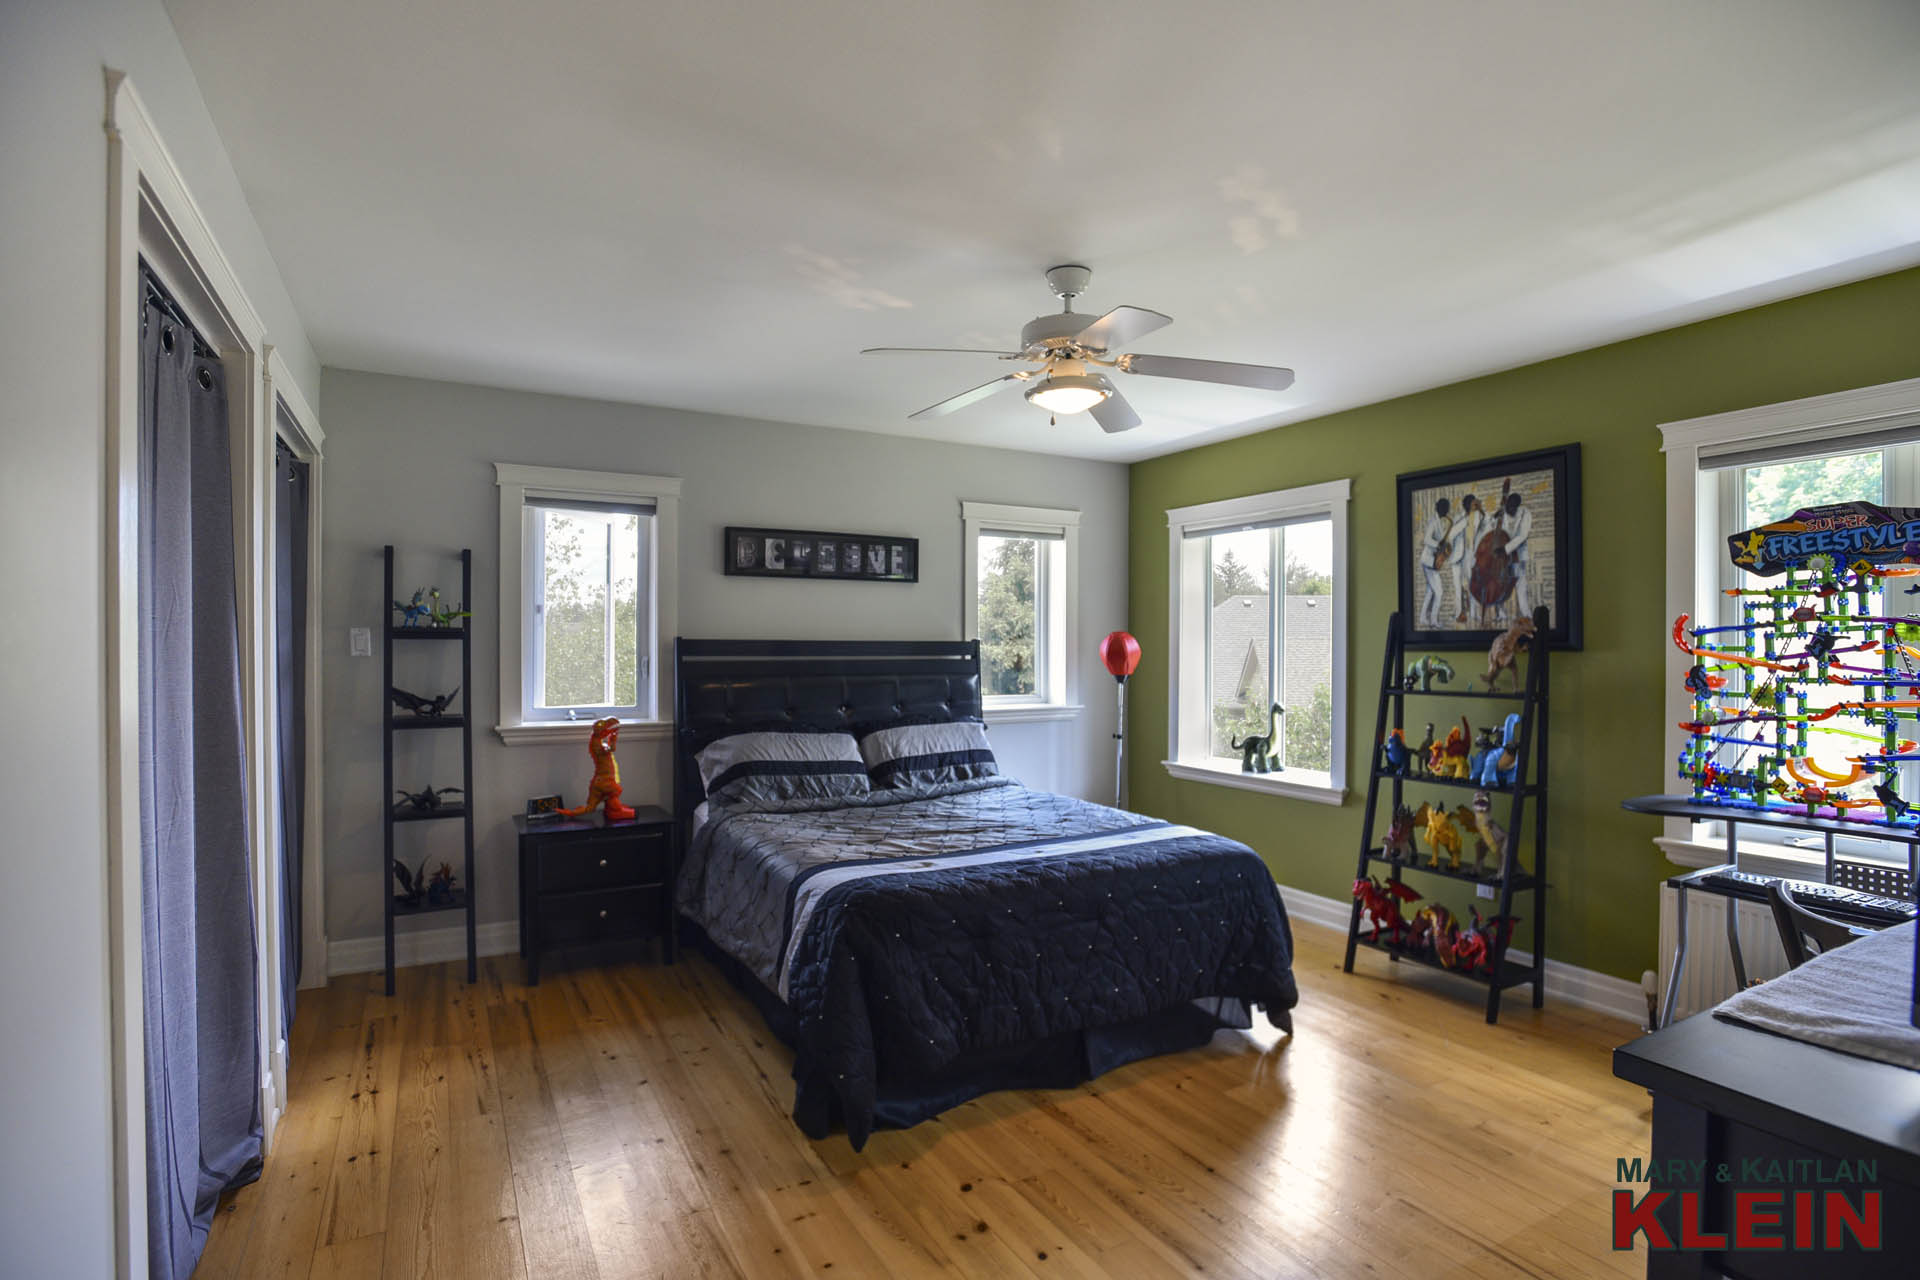 Bedroom #2 - Bedroom #3 - Bright, Pine Flooring, Ceiling fan, 2 Closets & Shared Semi-Ensuite